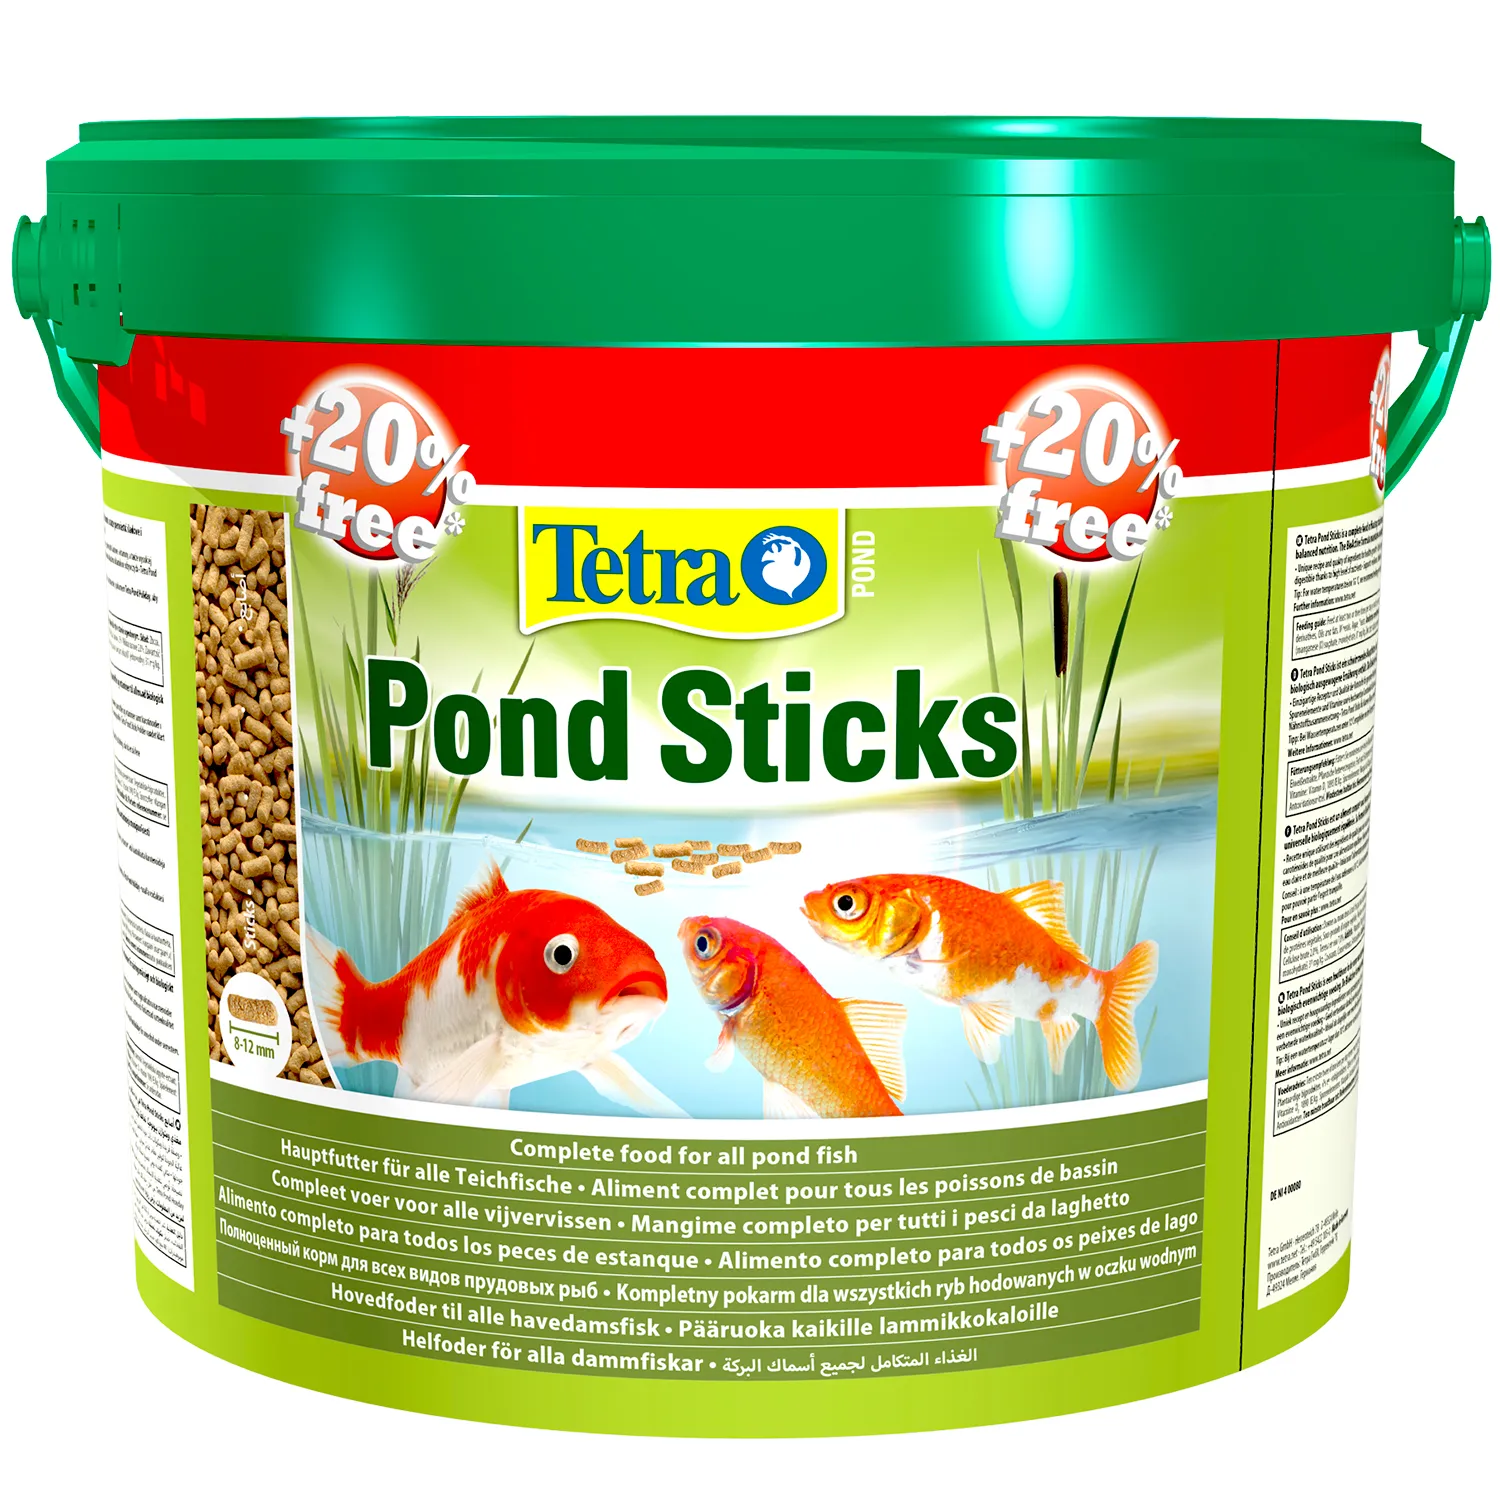 Tetra Pond Sticks корм для прудовых рыб в палочках 12 л АКЦИЯ 12л по цене 10!!!